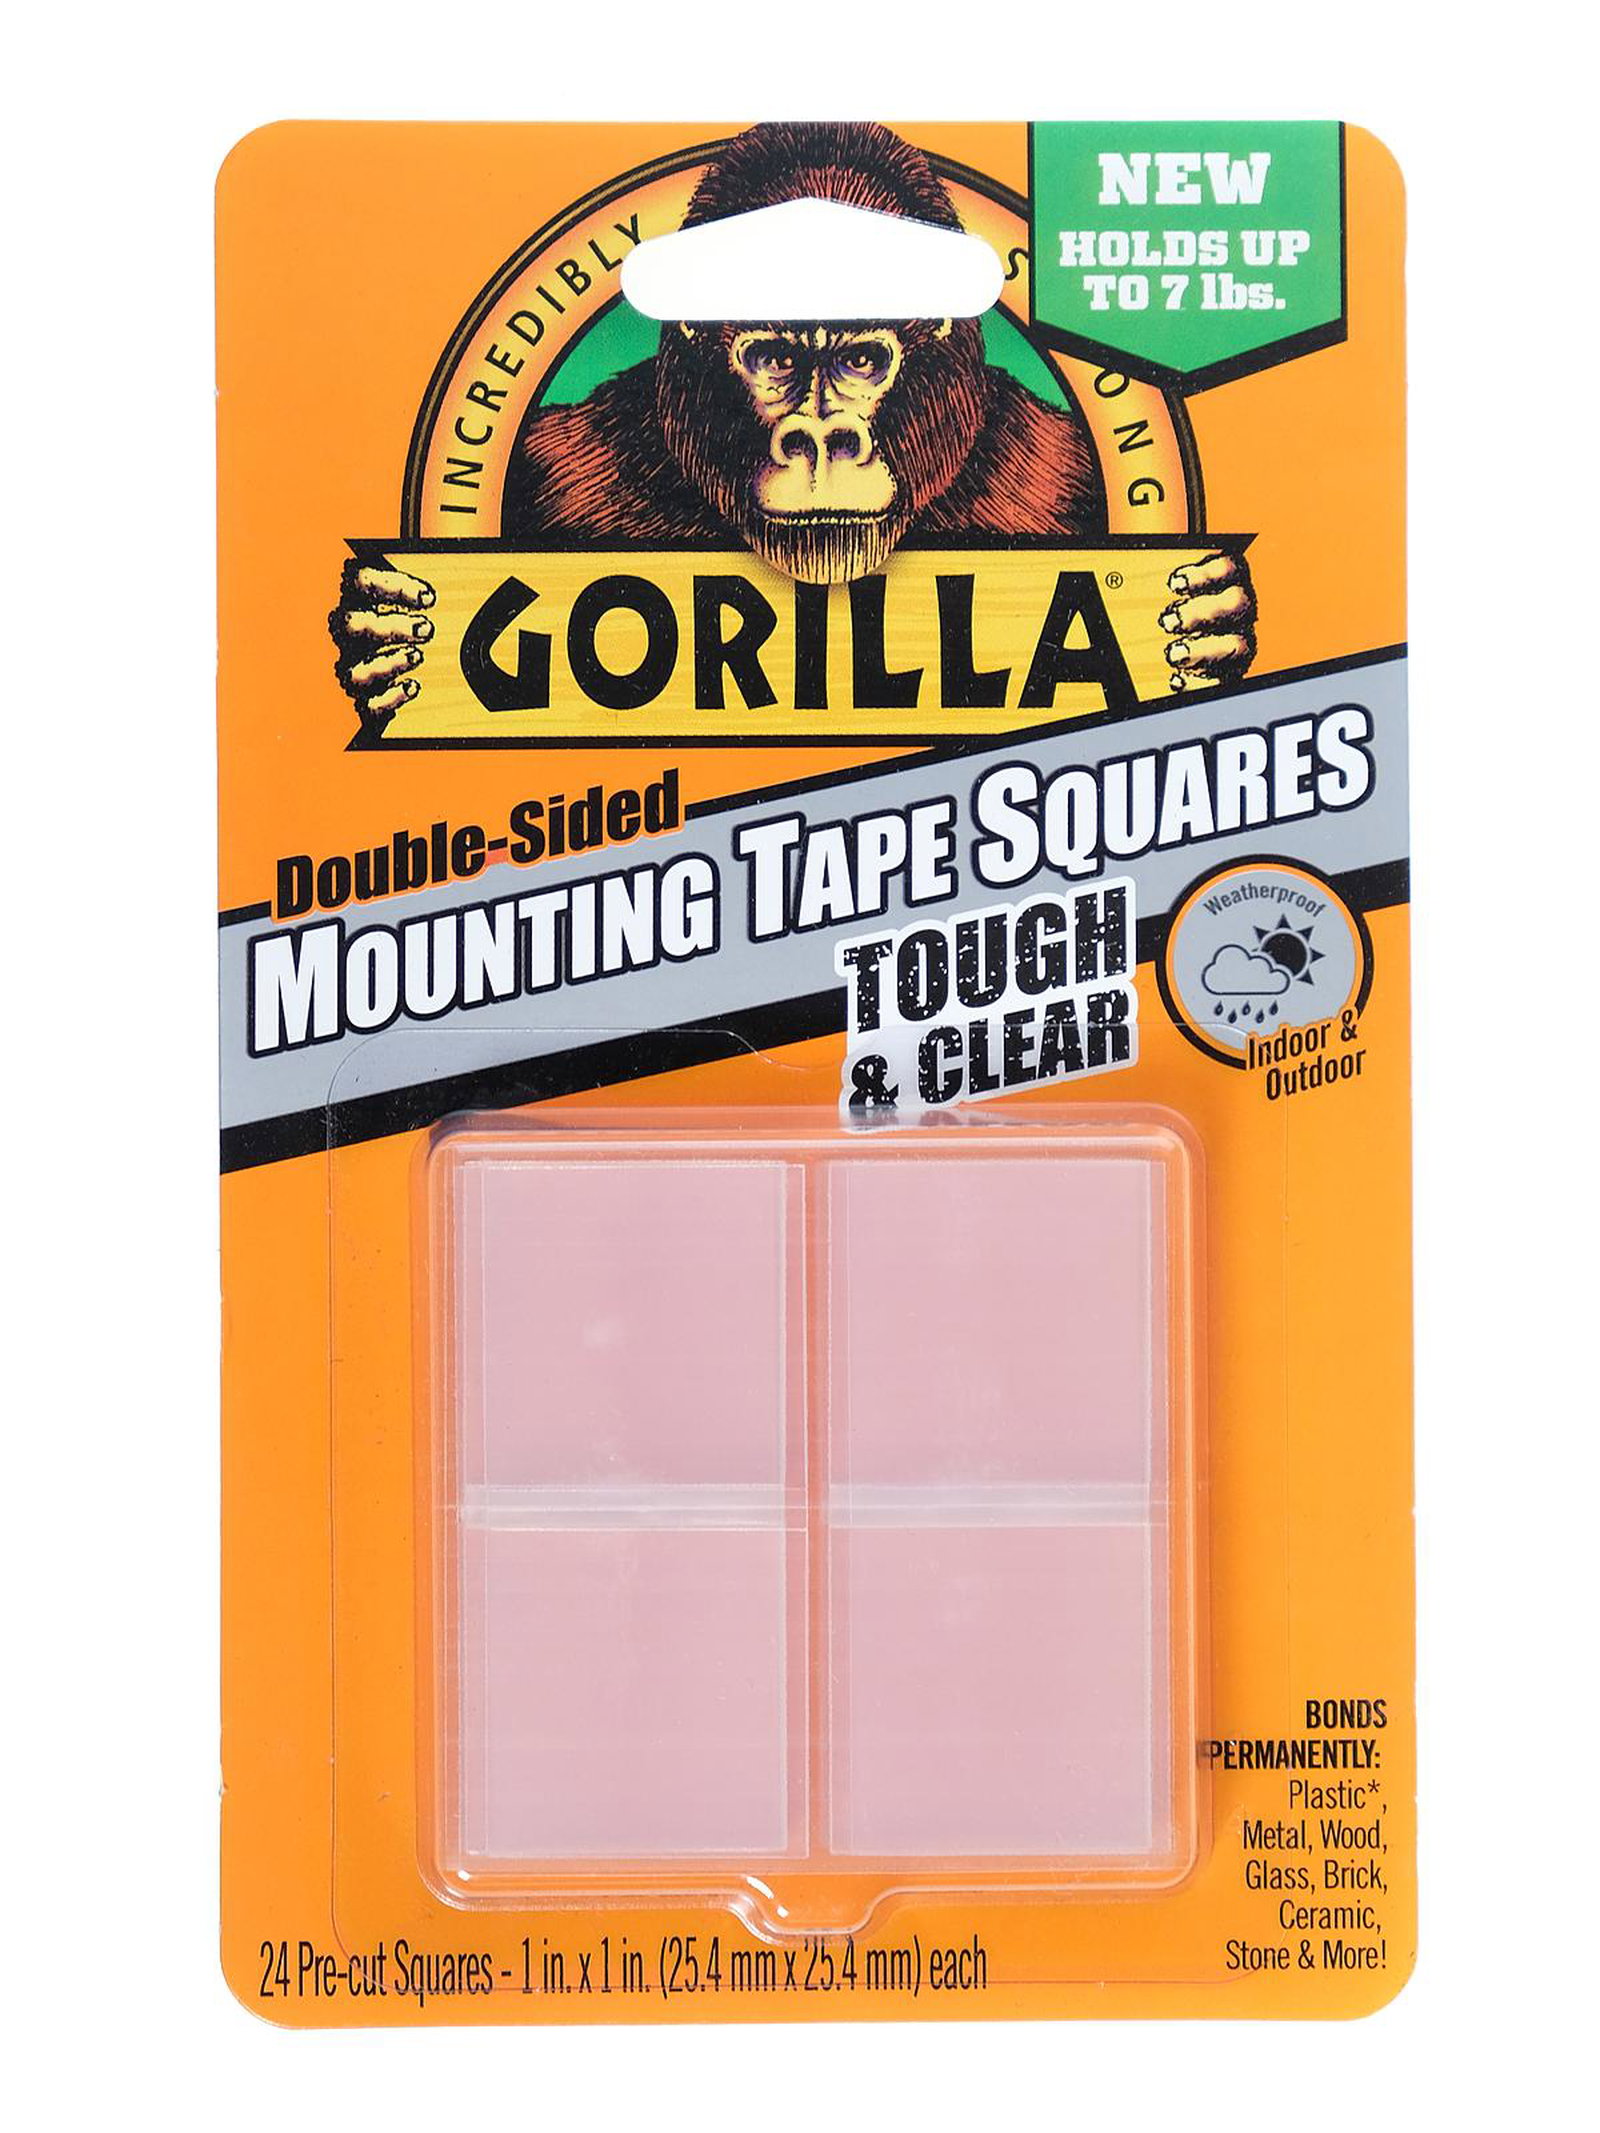 Gorilla Tough & Clear Mounting Tape Squares